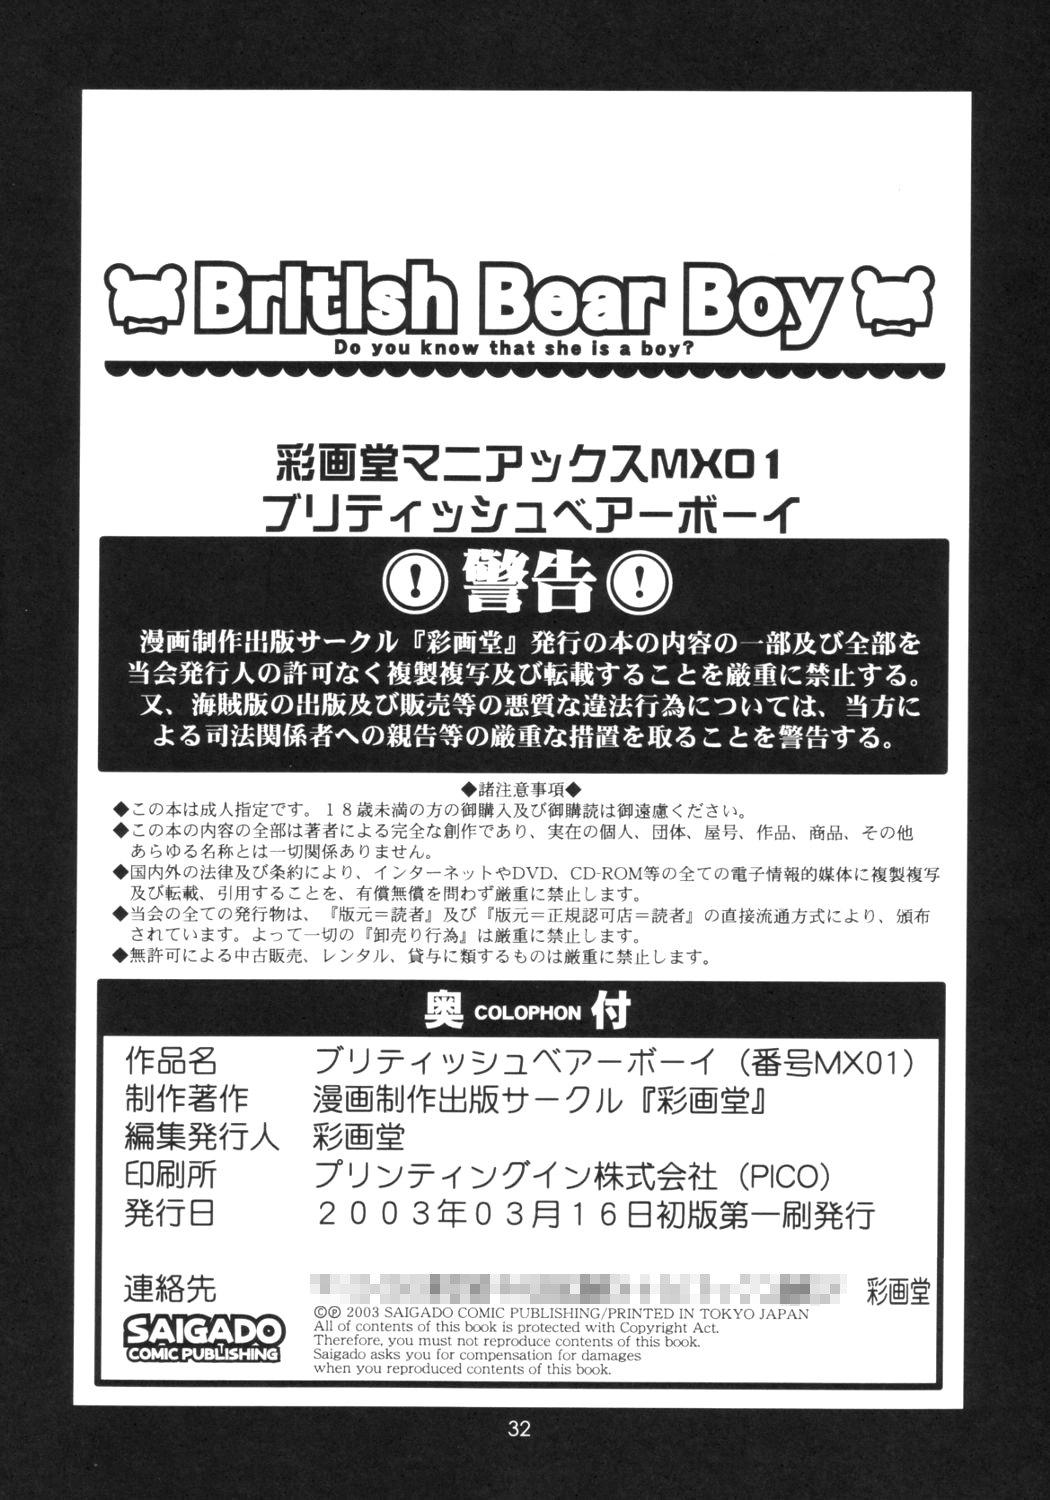 British Bear Boy 30